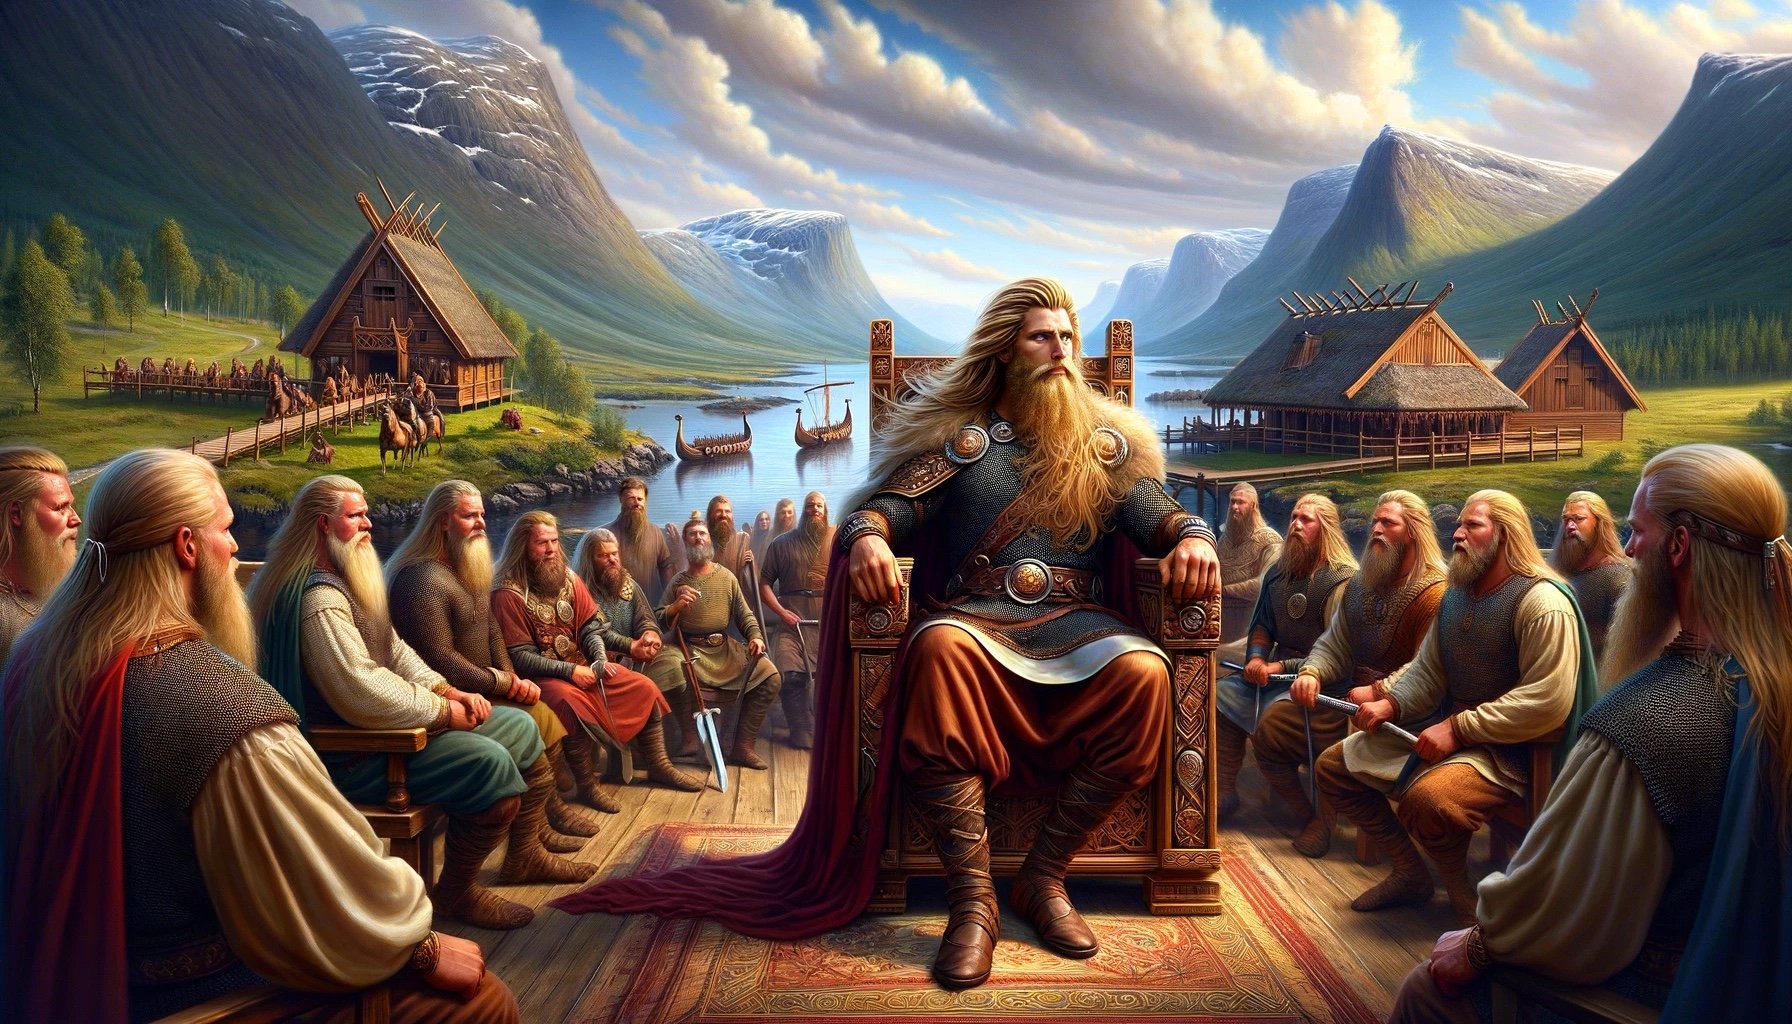 An interpretation of Viking King Harald Fairhair in Norway. Ilustration: David Nikel.